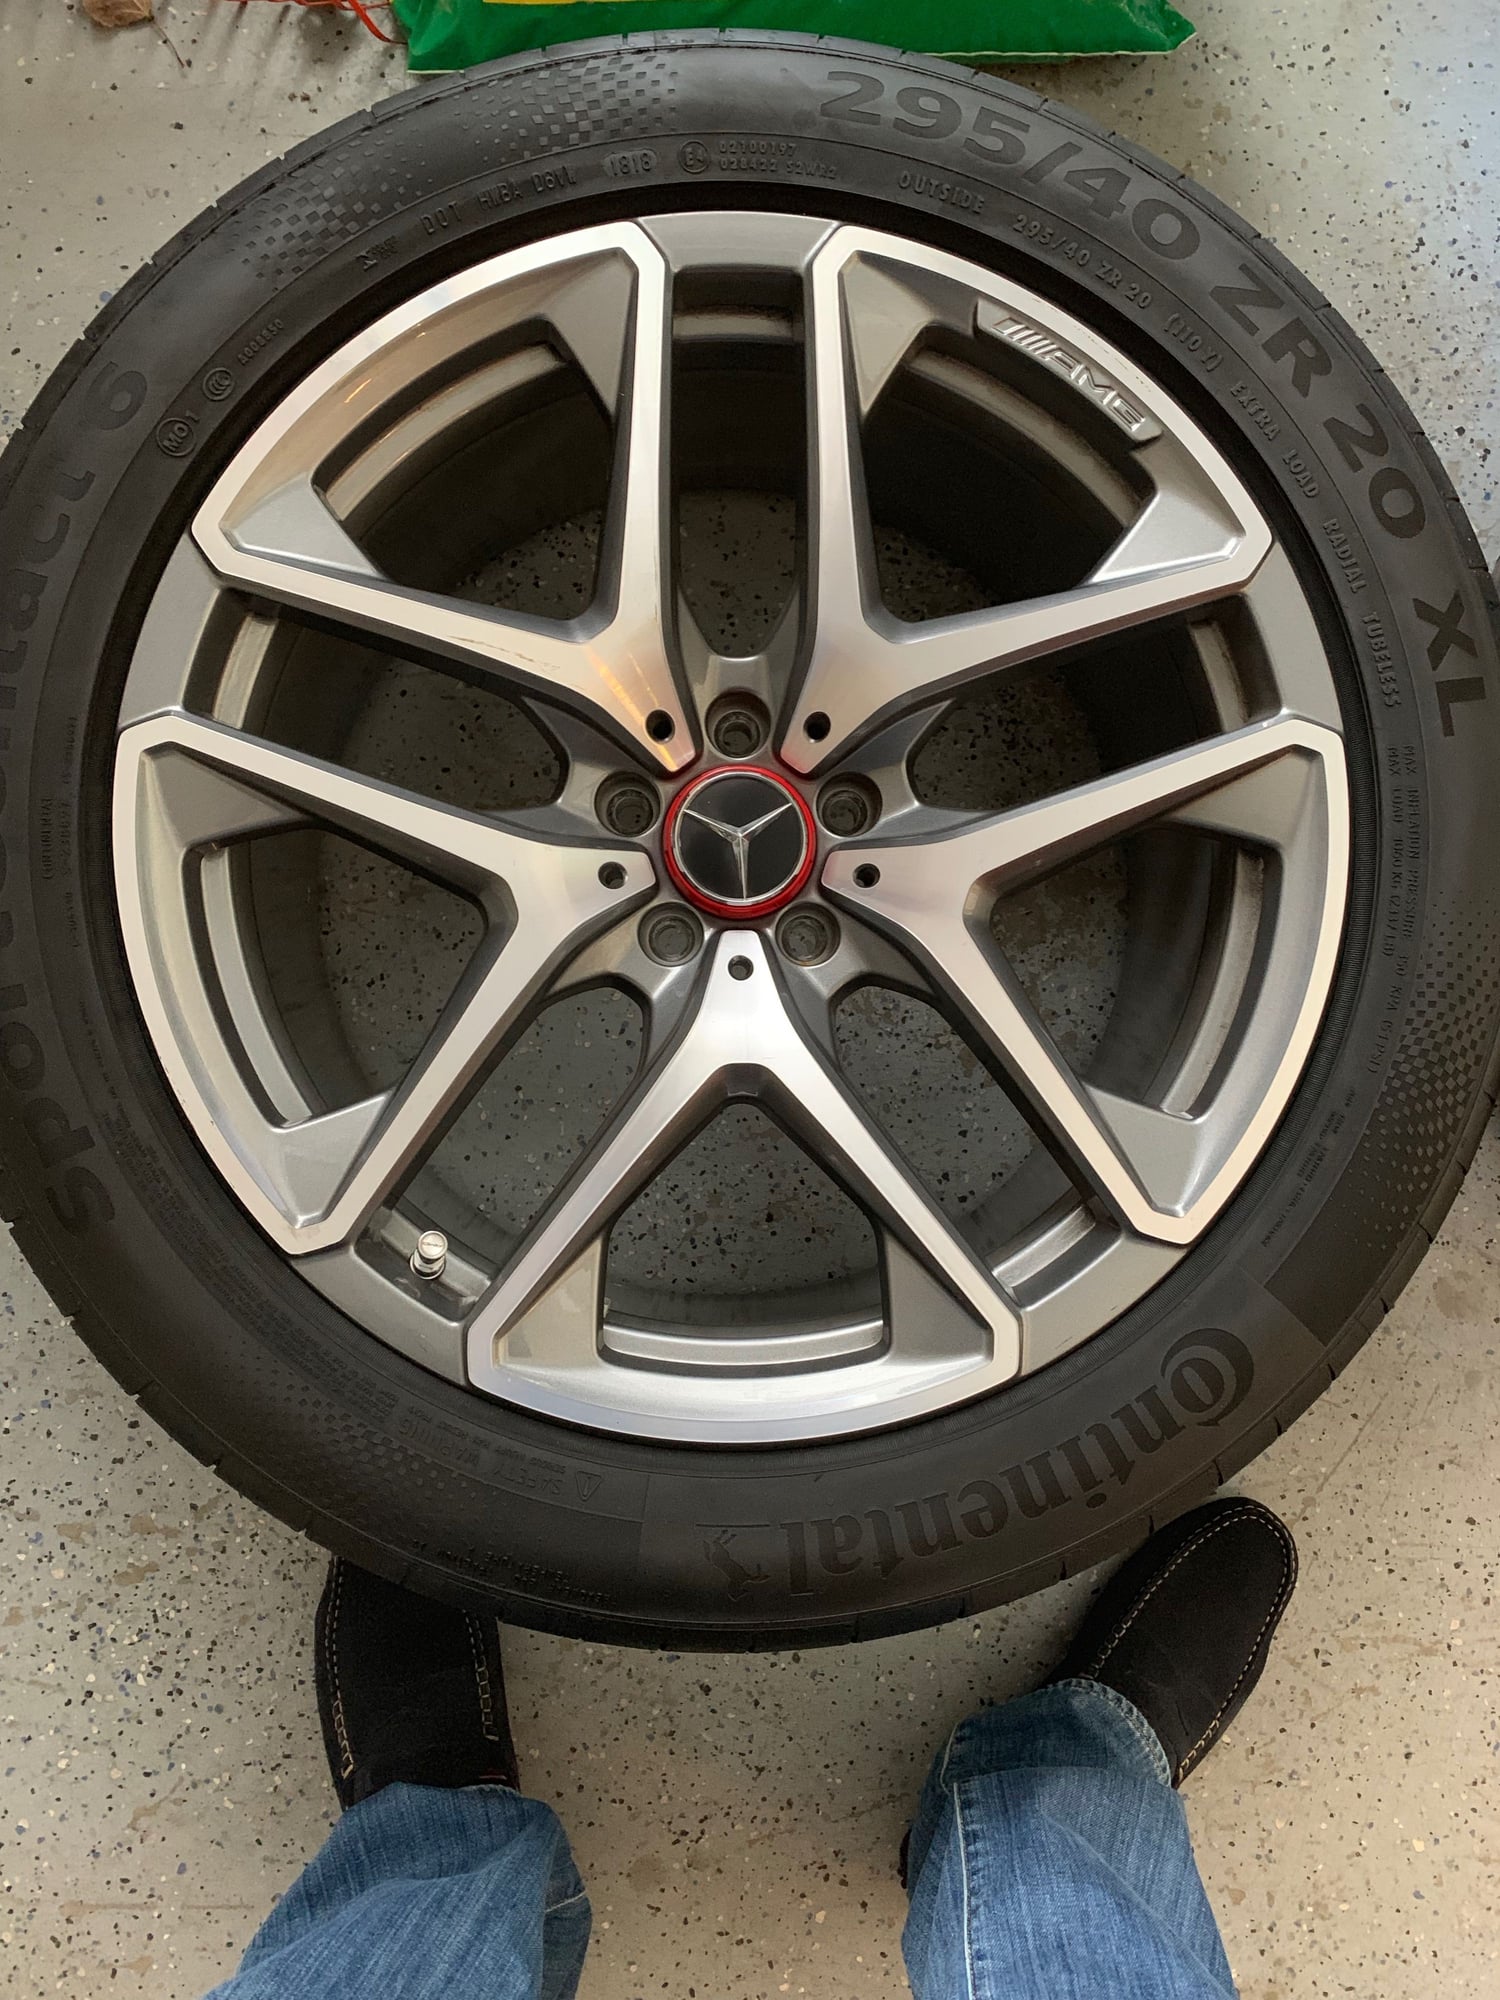 Wheels and Tires/Axles - 2019 GLC63 AMG 20 inch OEM wheels/tires/TPMS - New - 2019 Mercedes-Benz GLC63 AMG - Aurora, CO 80016, United States